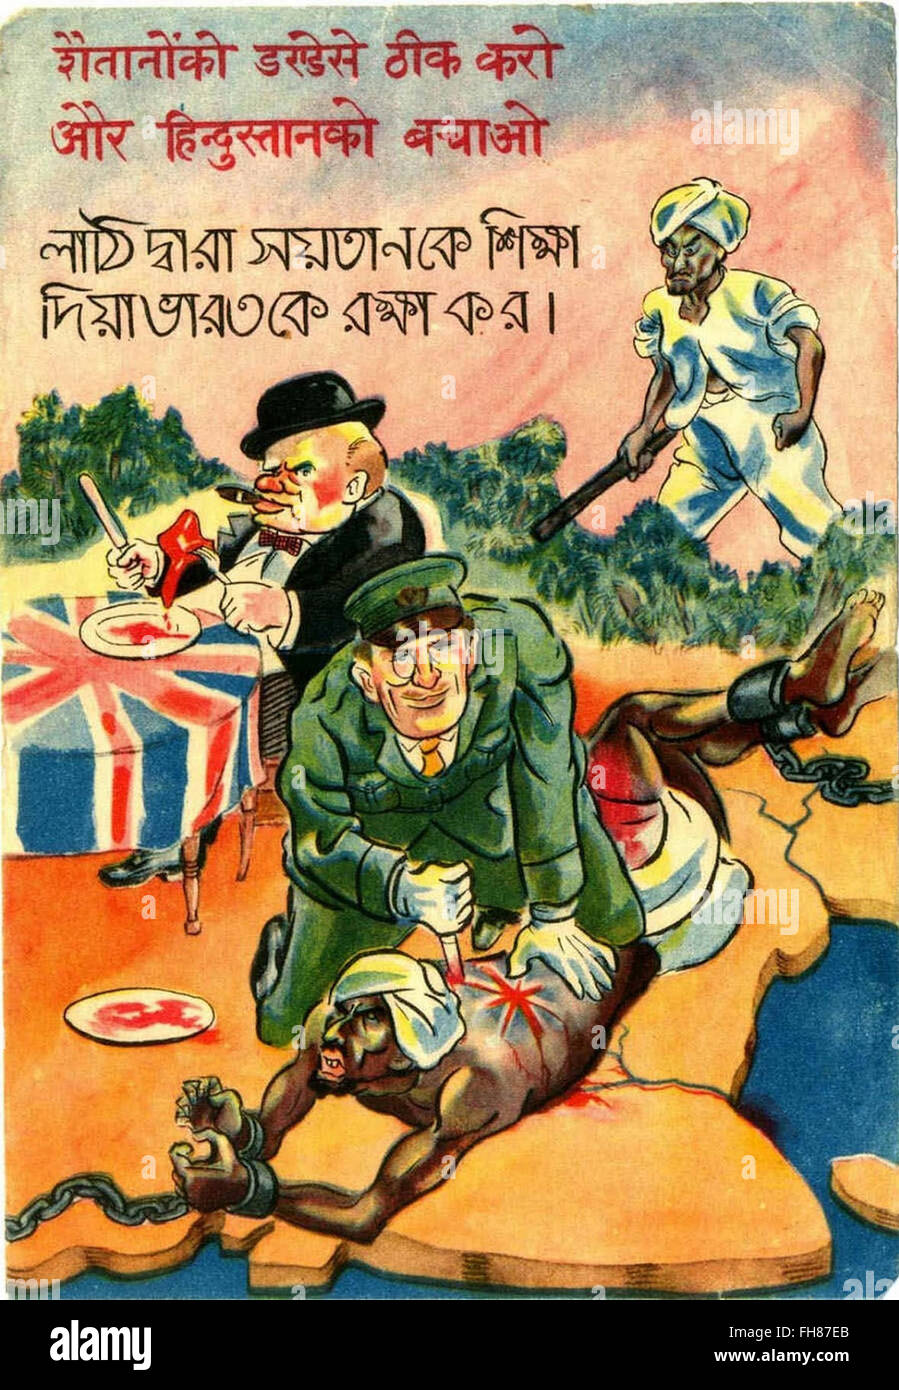 Japanische Propaganda gezielt indische Truppen gegen Briten - Propaganda Poster - WWII Stockfoto